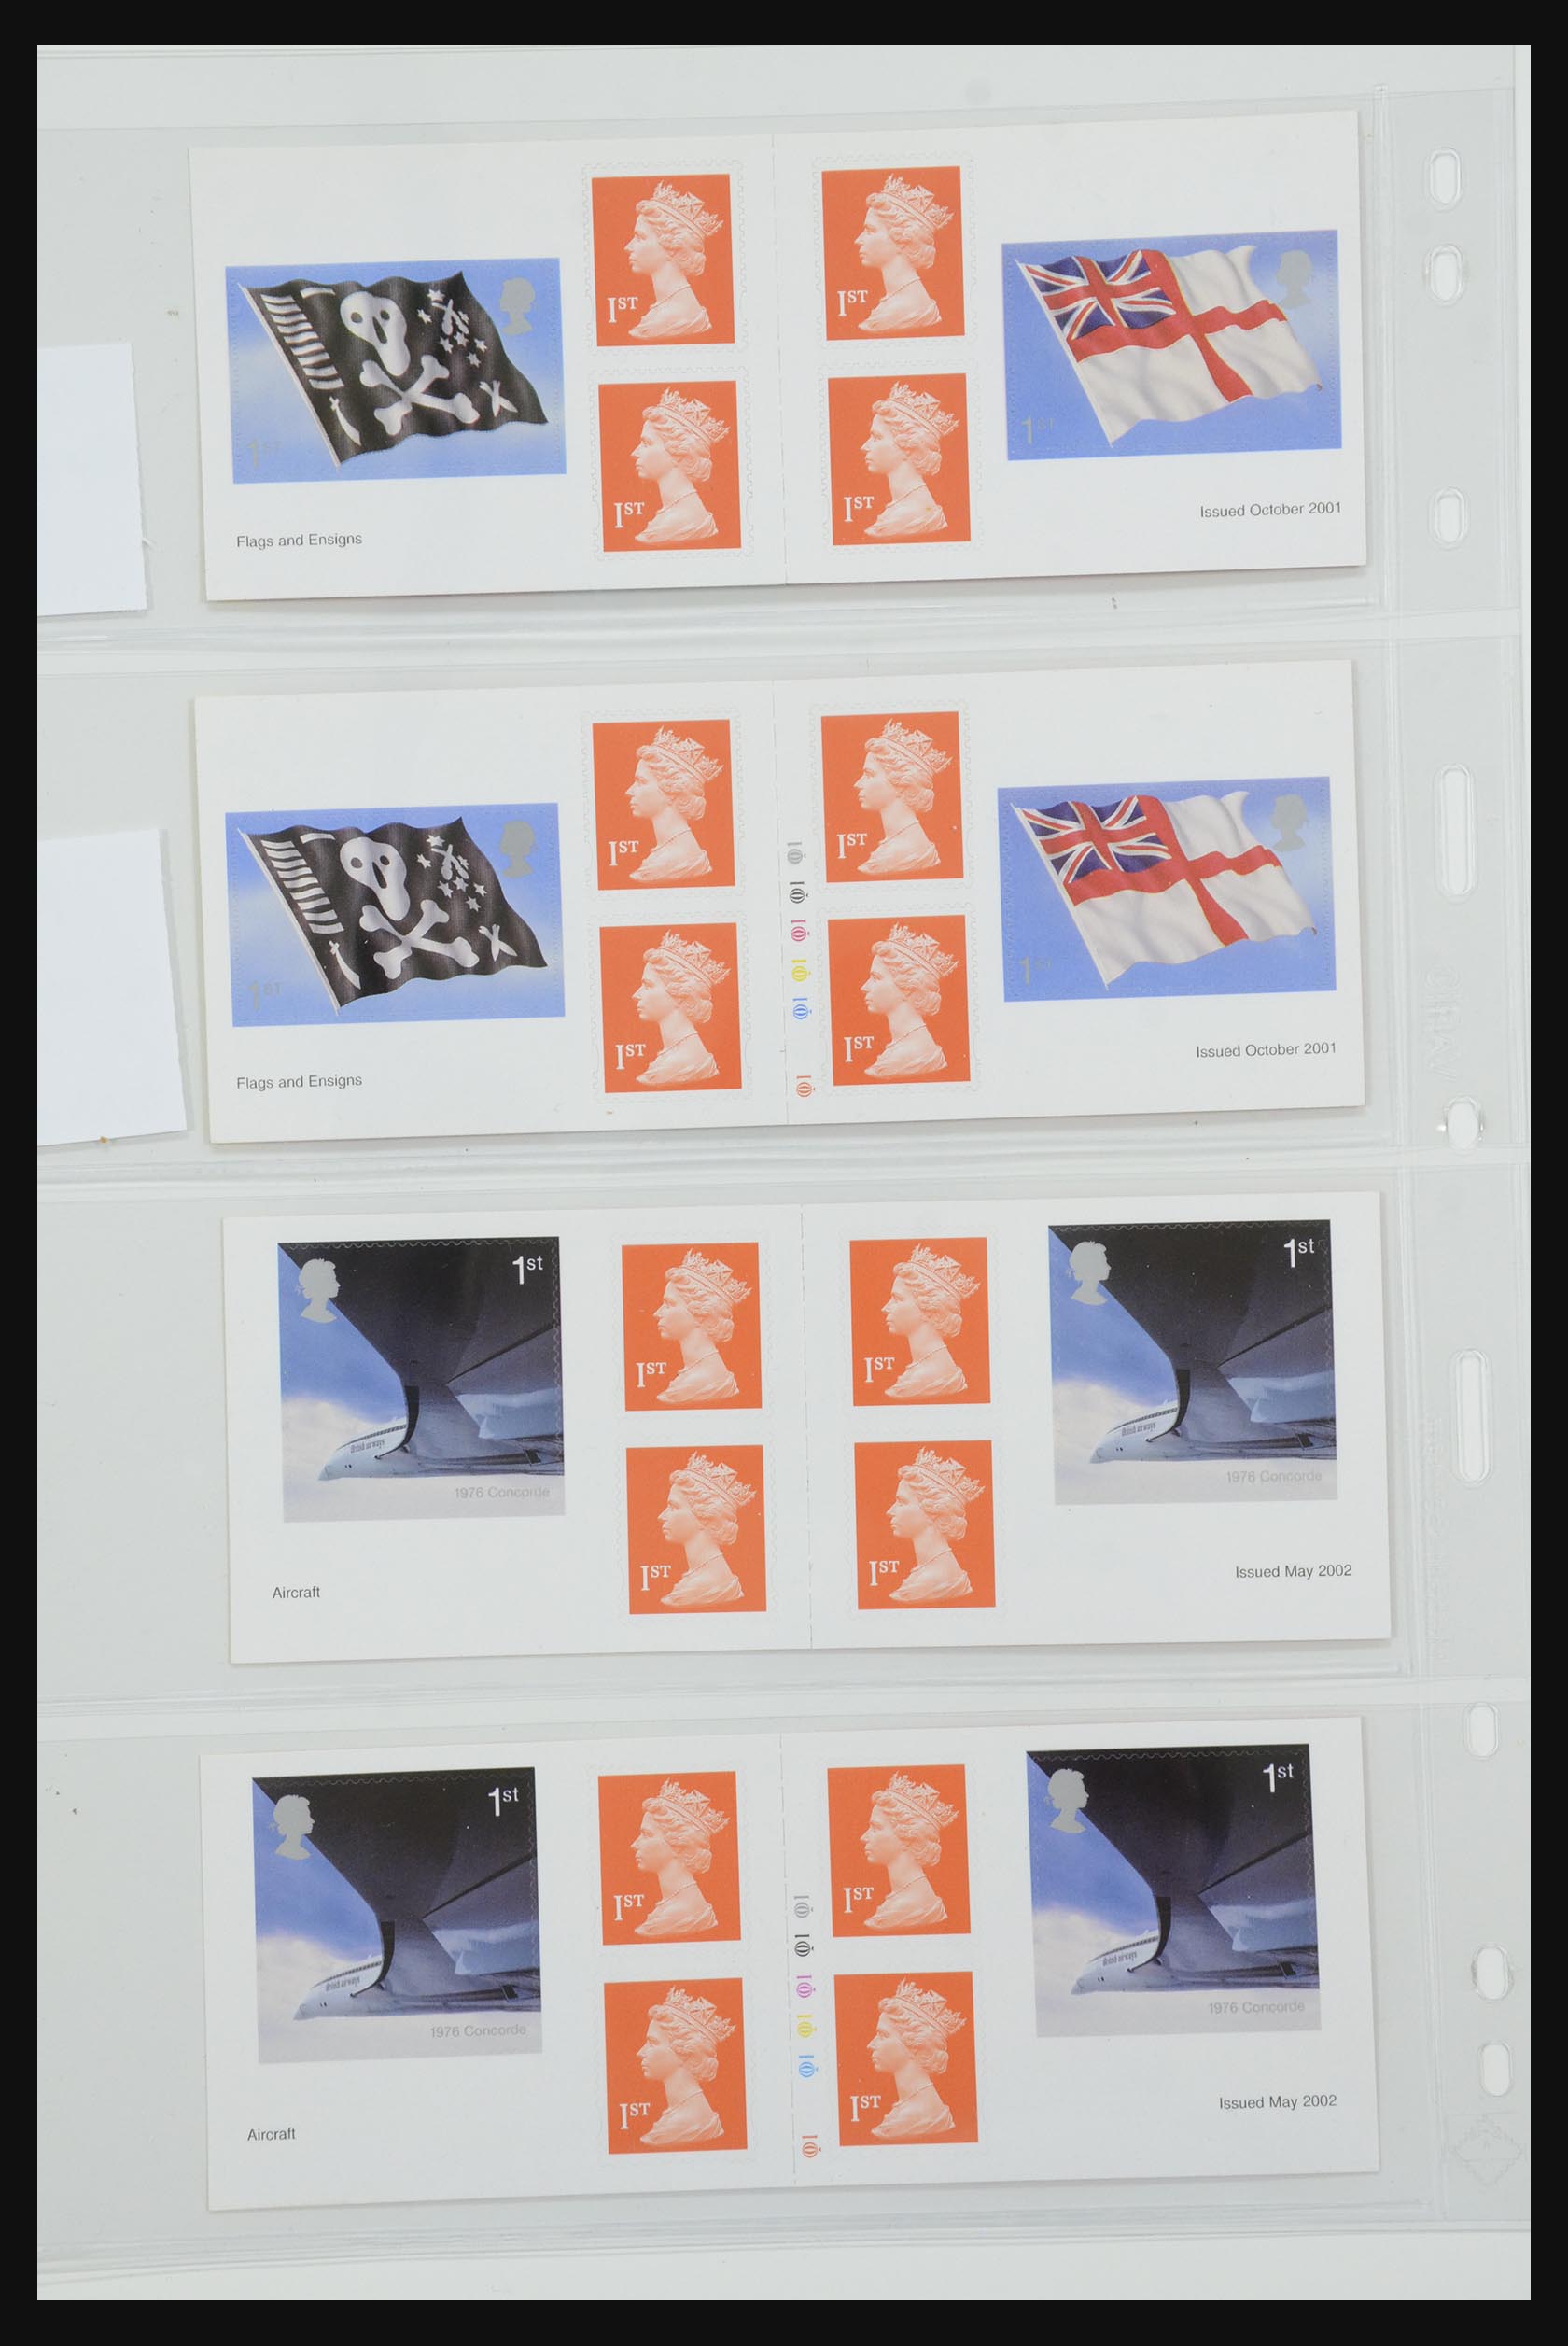 31959 366 - 31959 Great Britain stampbooklets 1987-2016!!